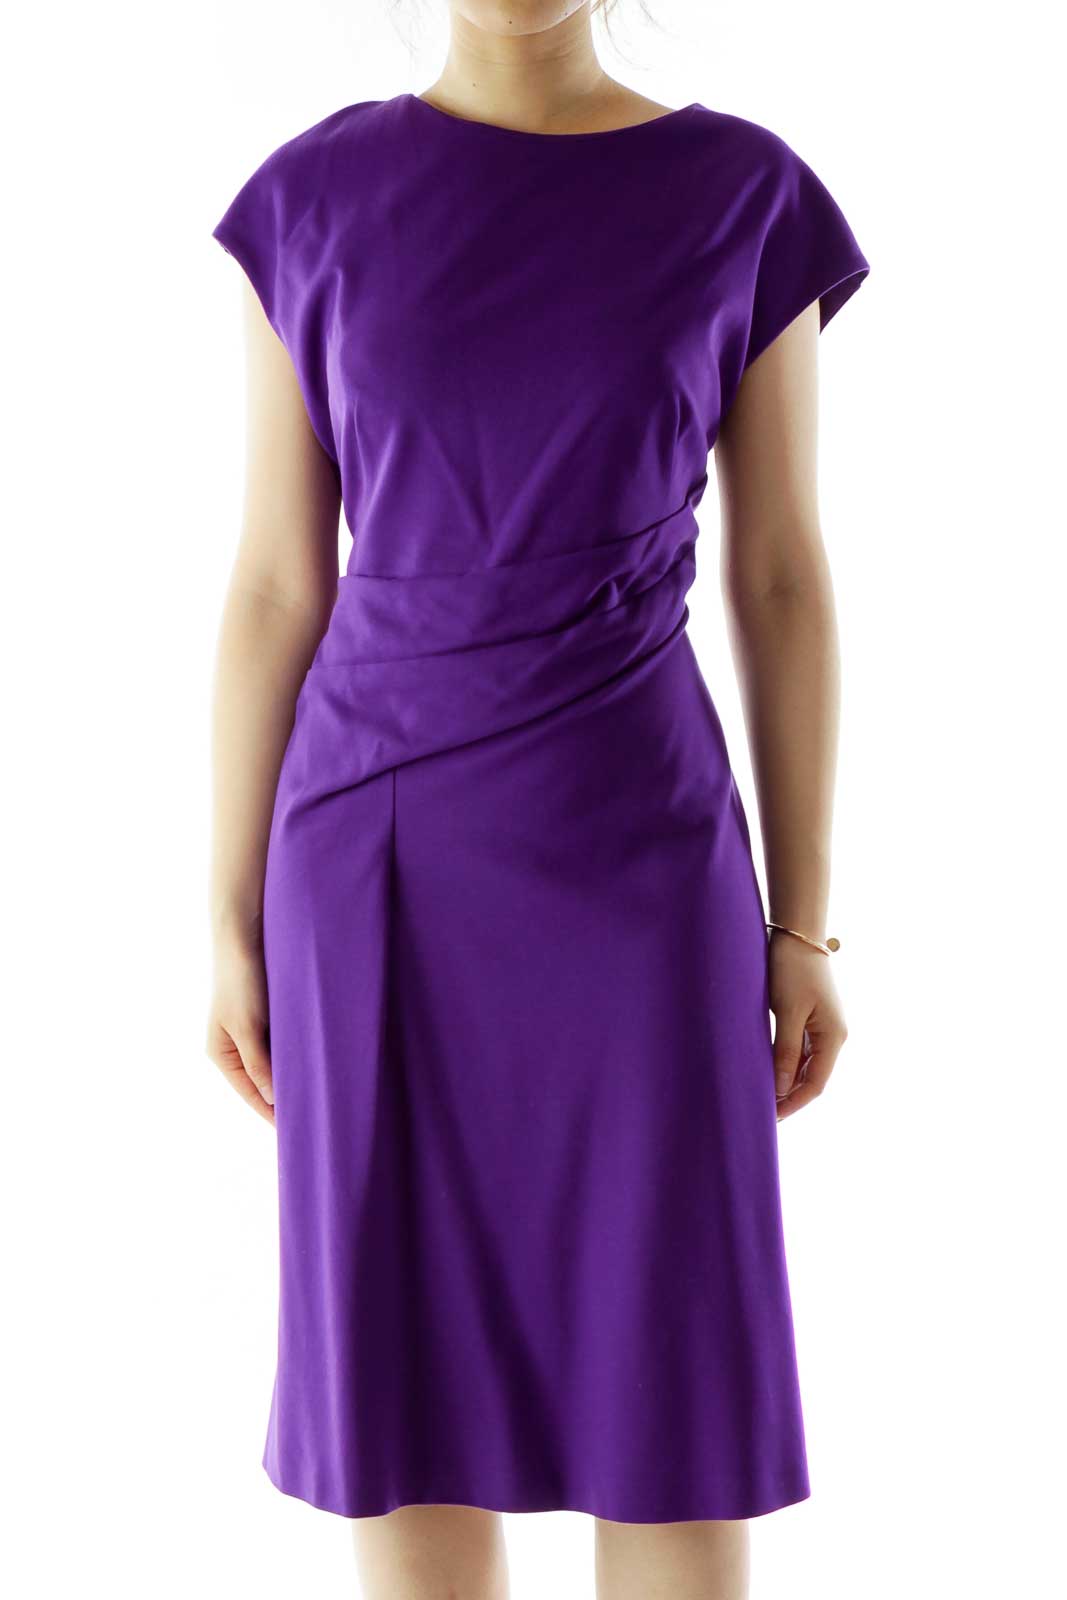 Iris Purple A-Line Day Dress Front